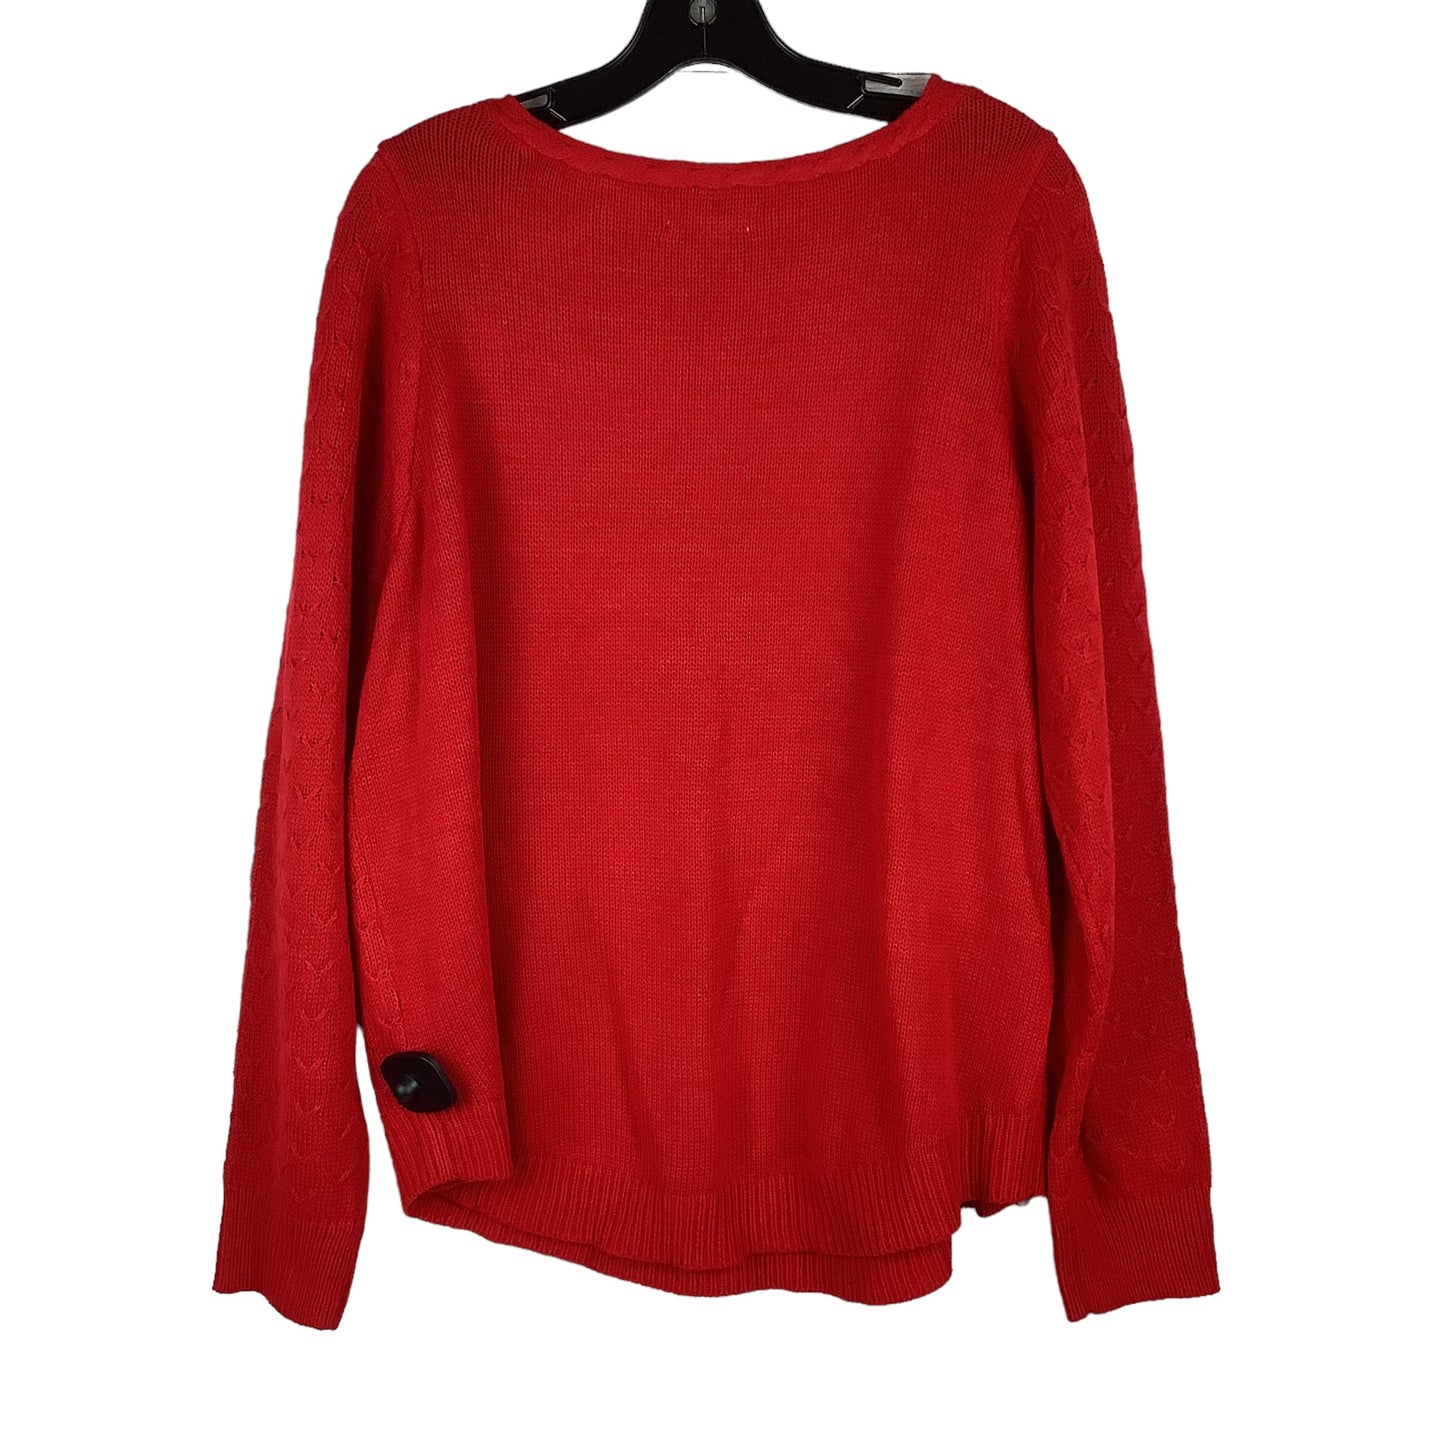 Sweater By Croft And Barrow  Size: Xxl